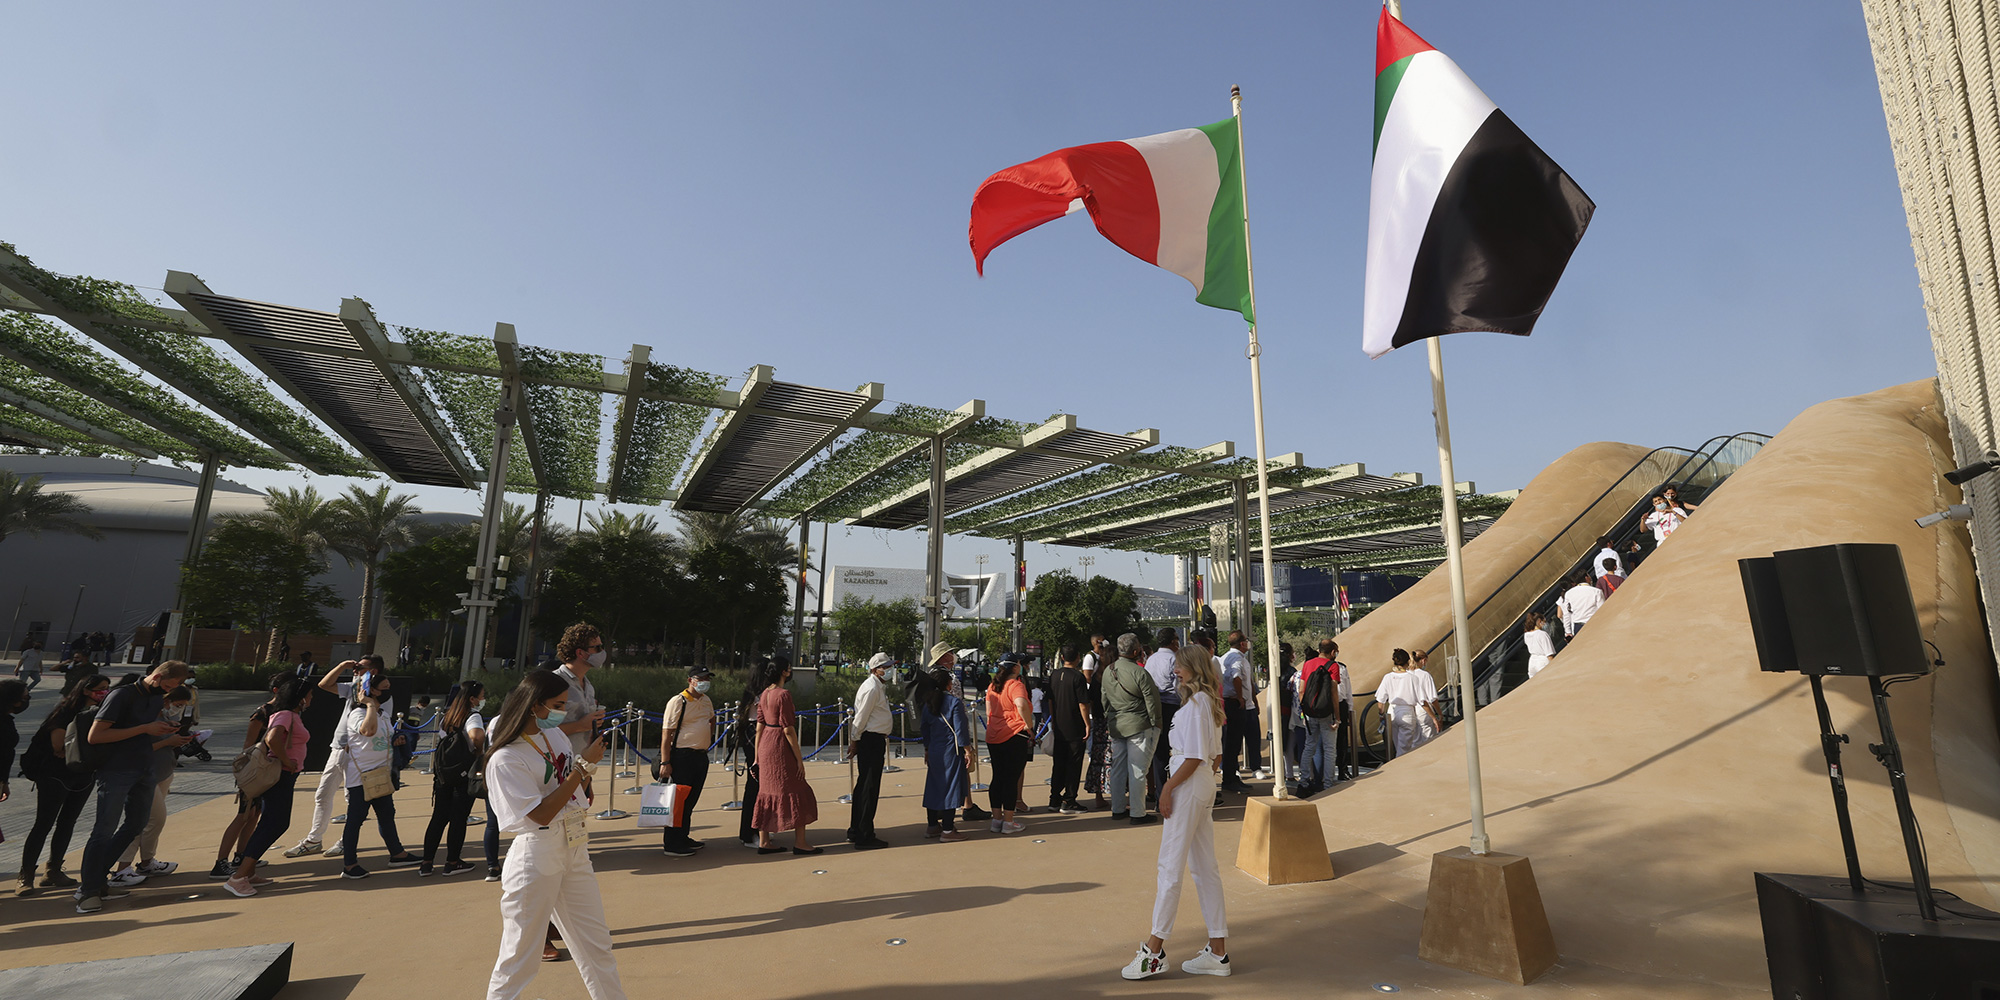 Italian and Saudi flags close together